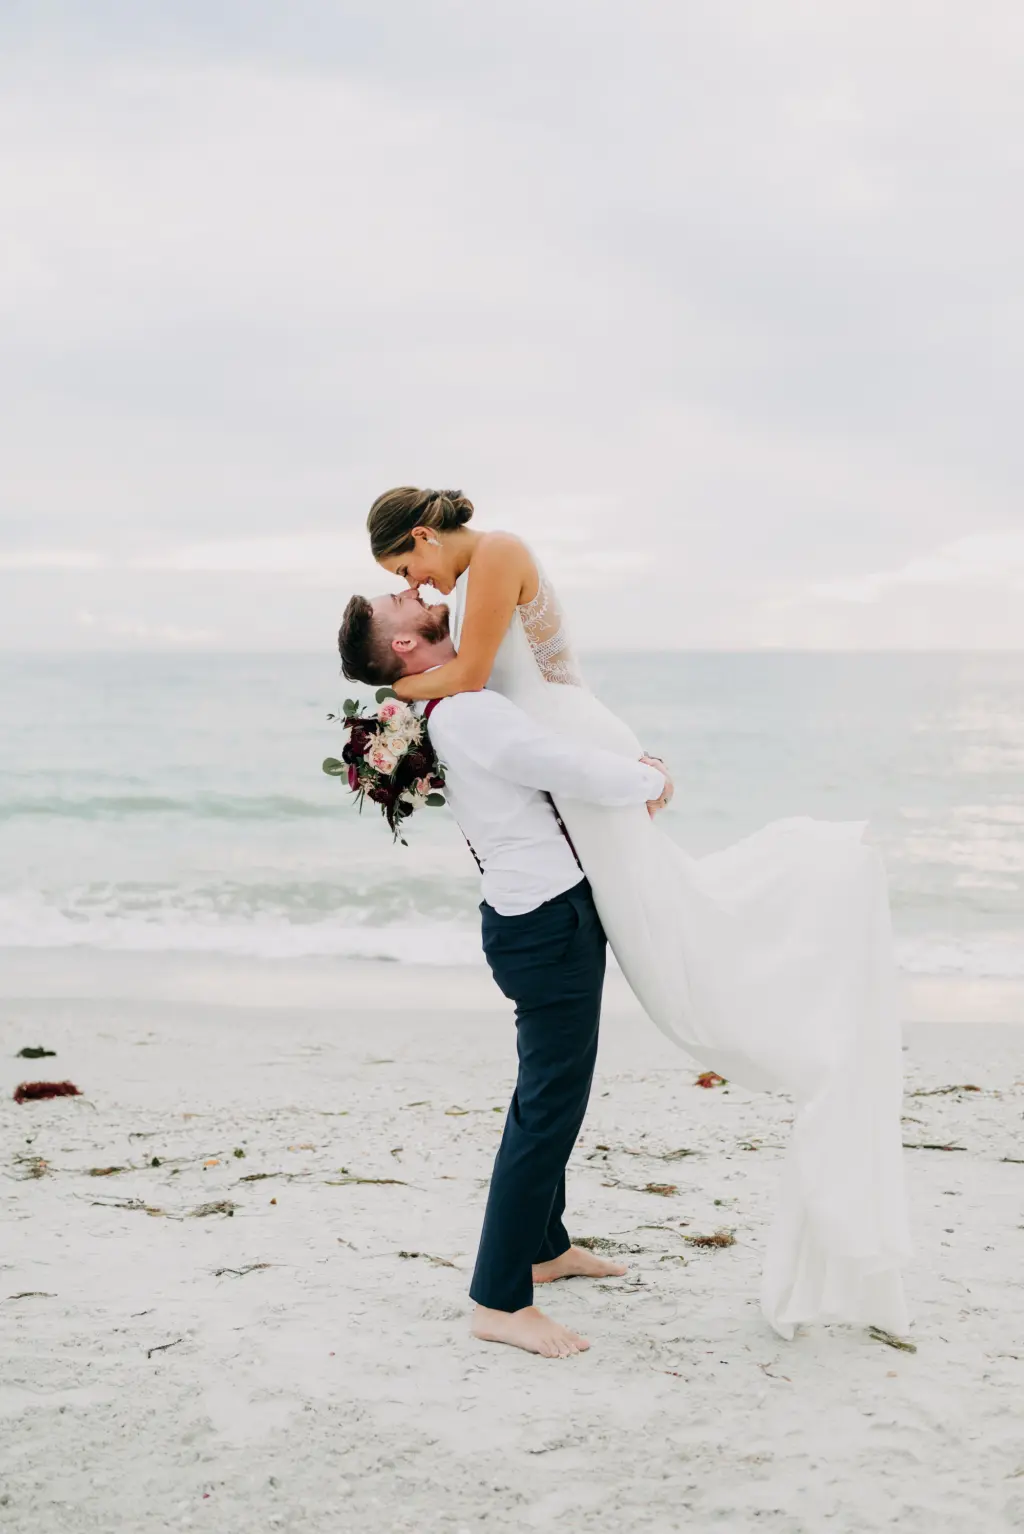 Bride and Groom Fall Elopement Beach Wedding Portrait | Florida Photographer Amber McWhorter Photography